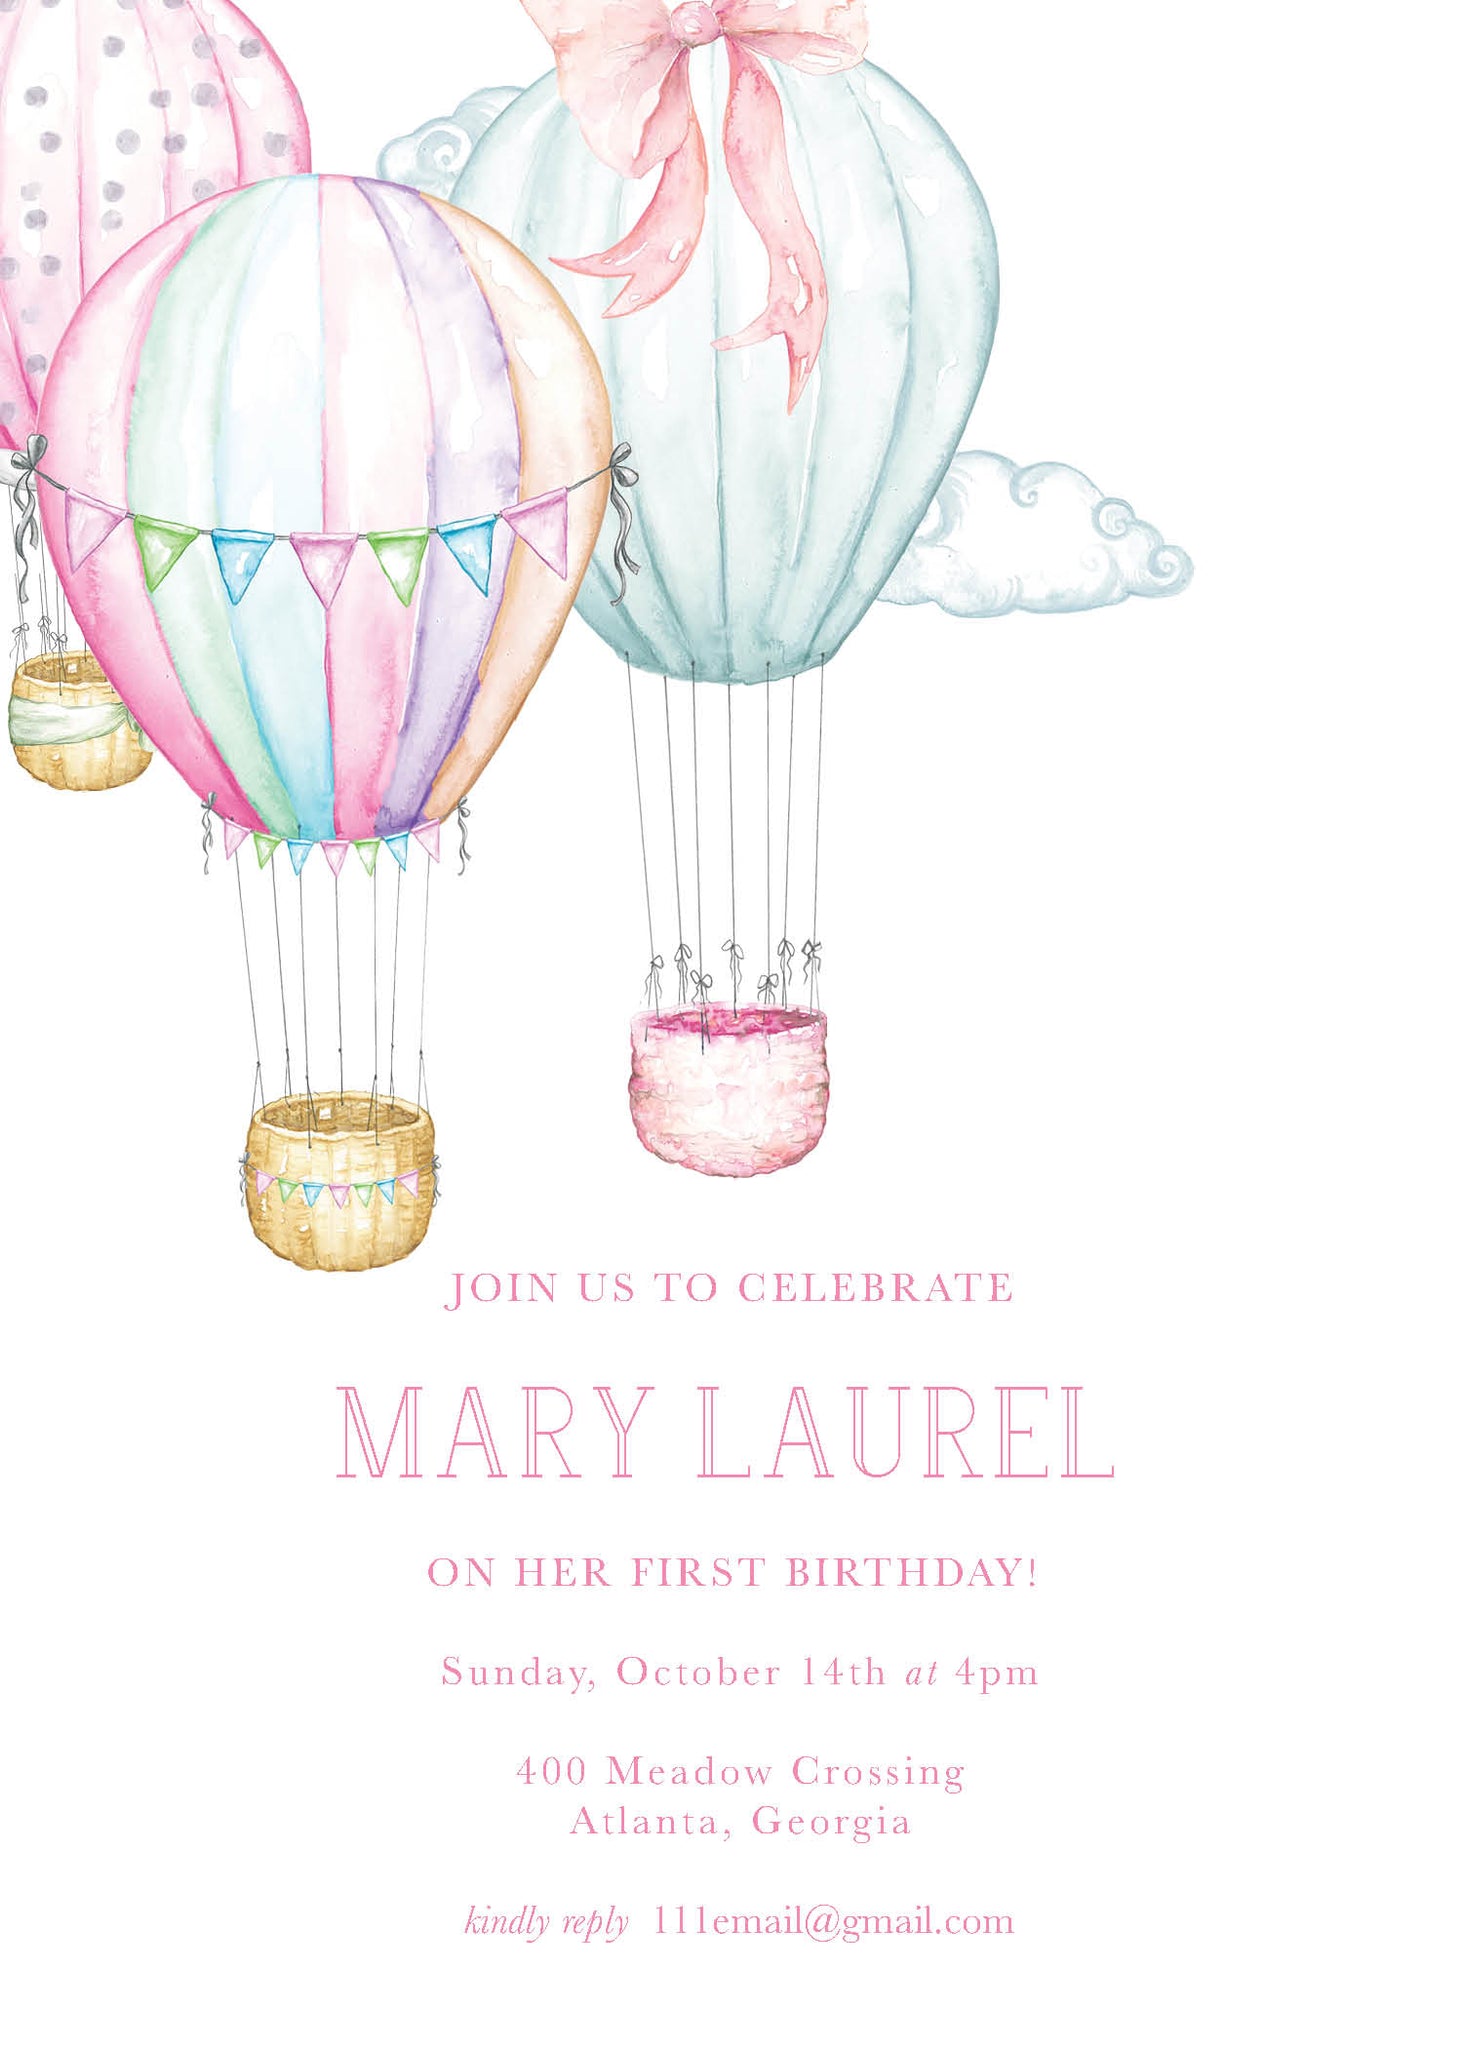 Hot Air Balloons Birthday Party Invitation